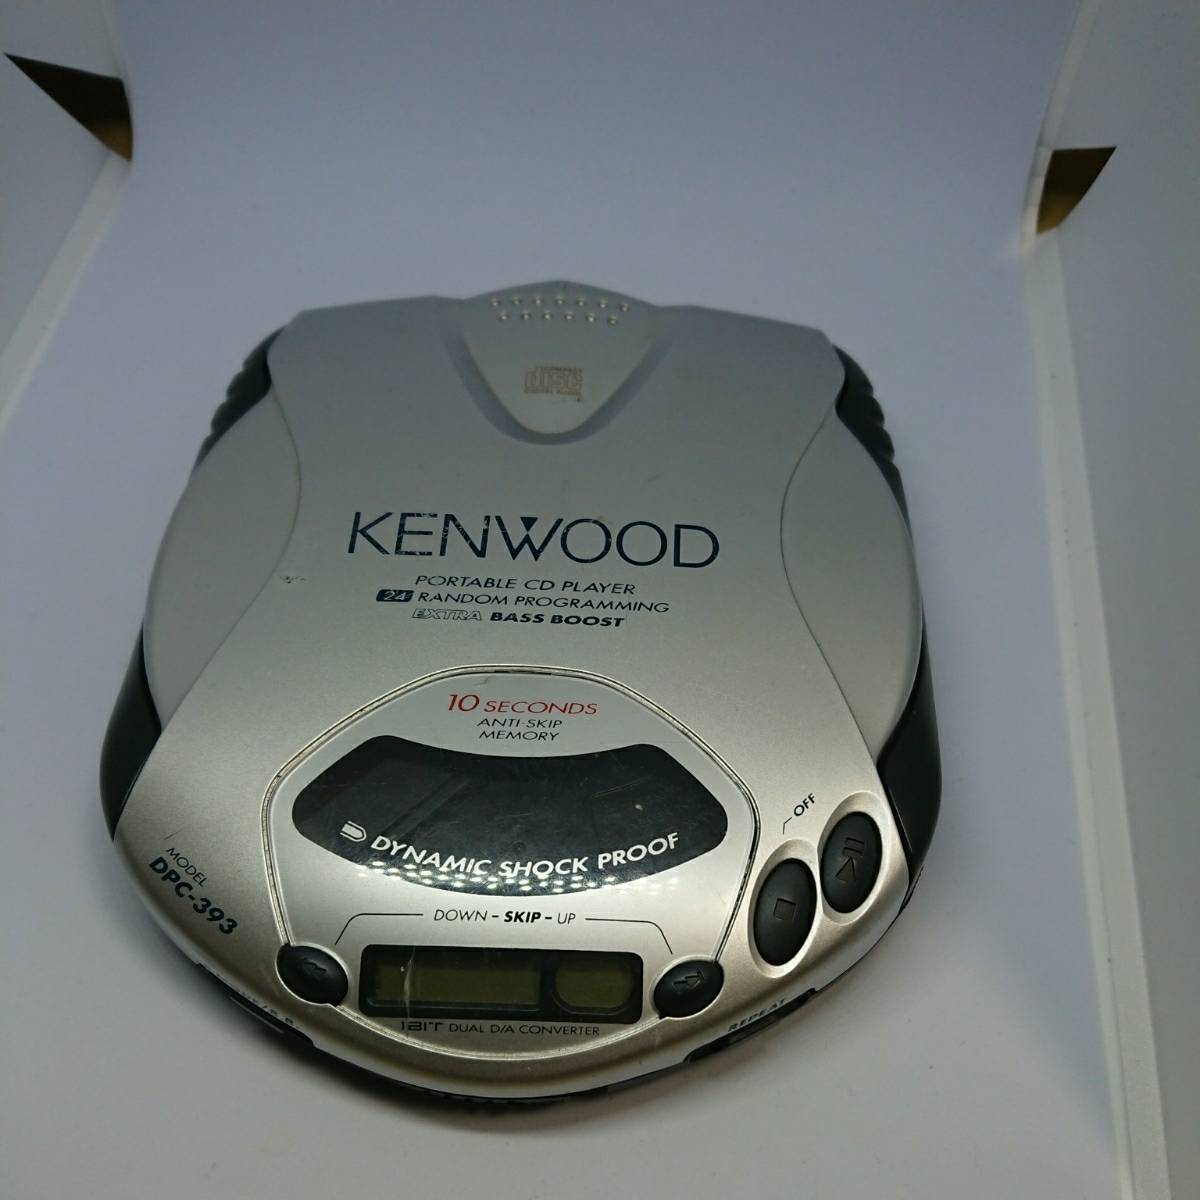 Kenwood DPC-393